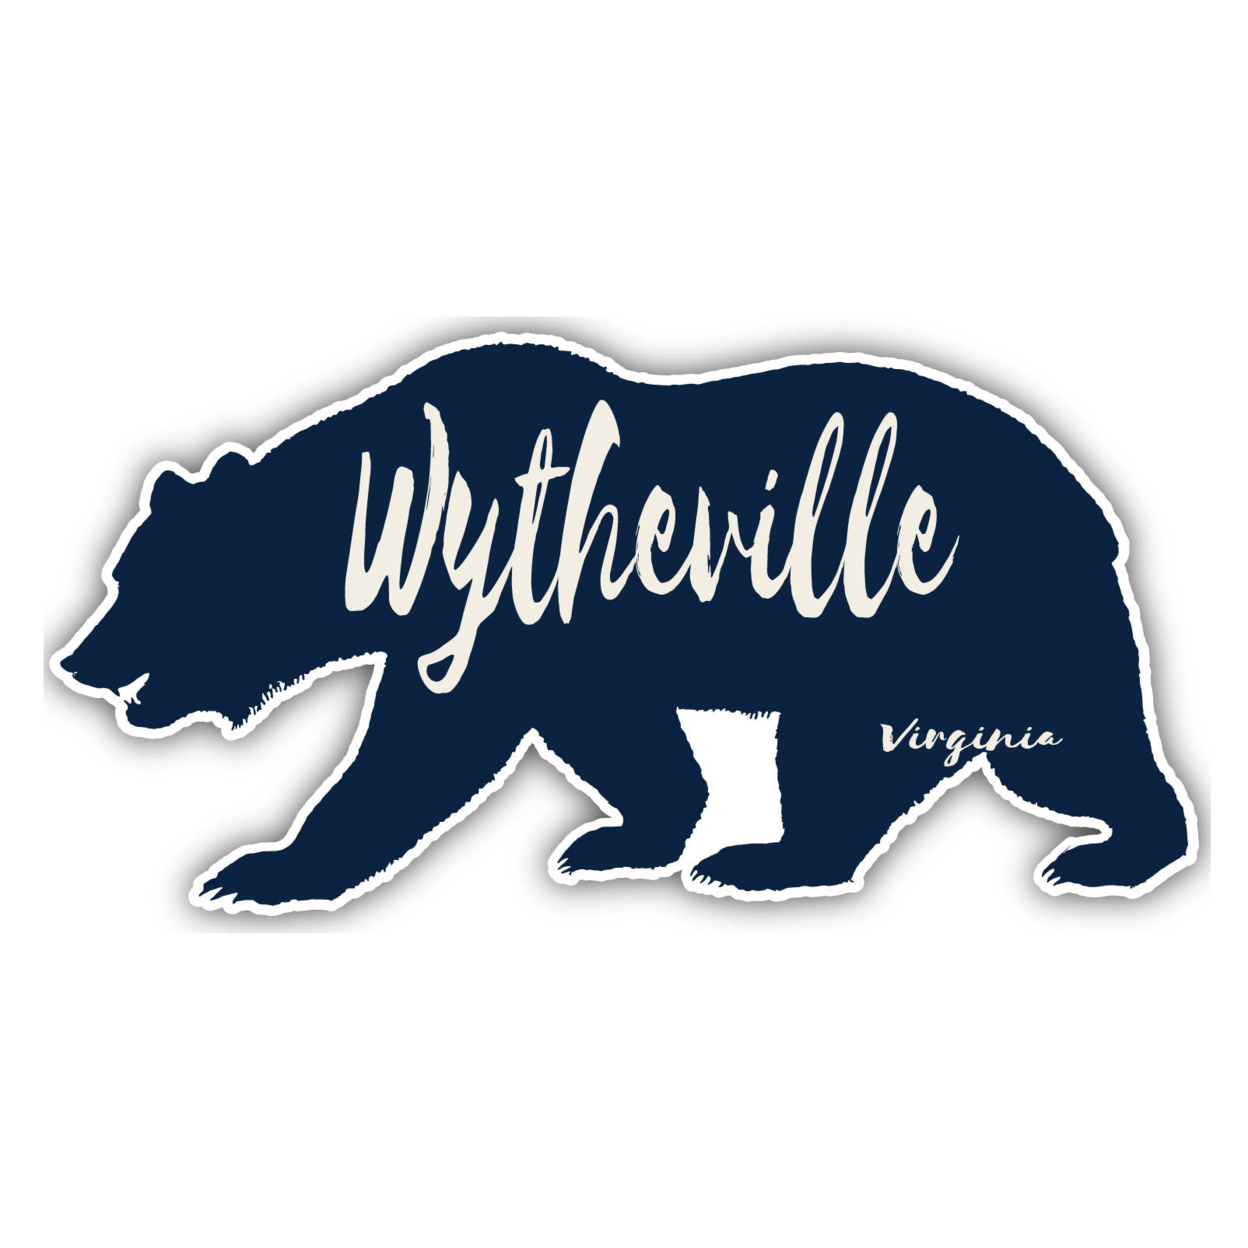 Wytheville Virginia Souvenir Decorative Stickers (Choose Theme And Size) - Single Unit, 4-Inch, Bear